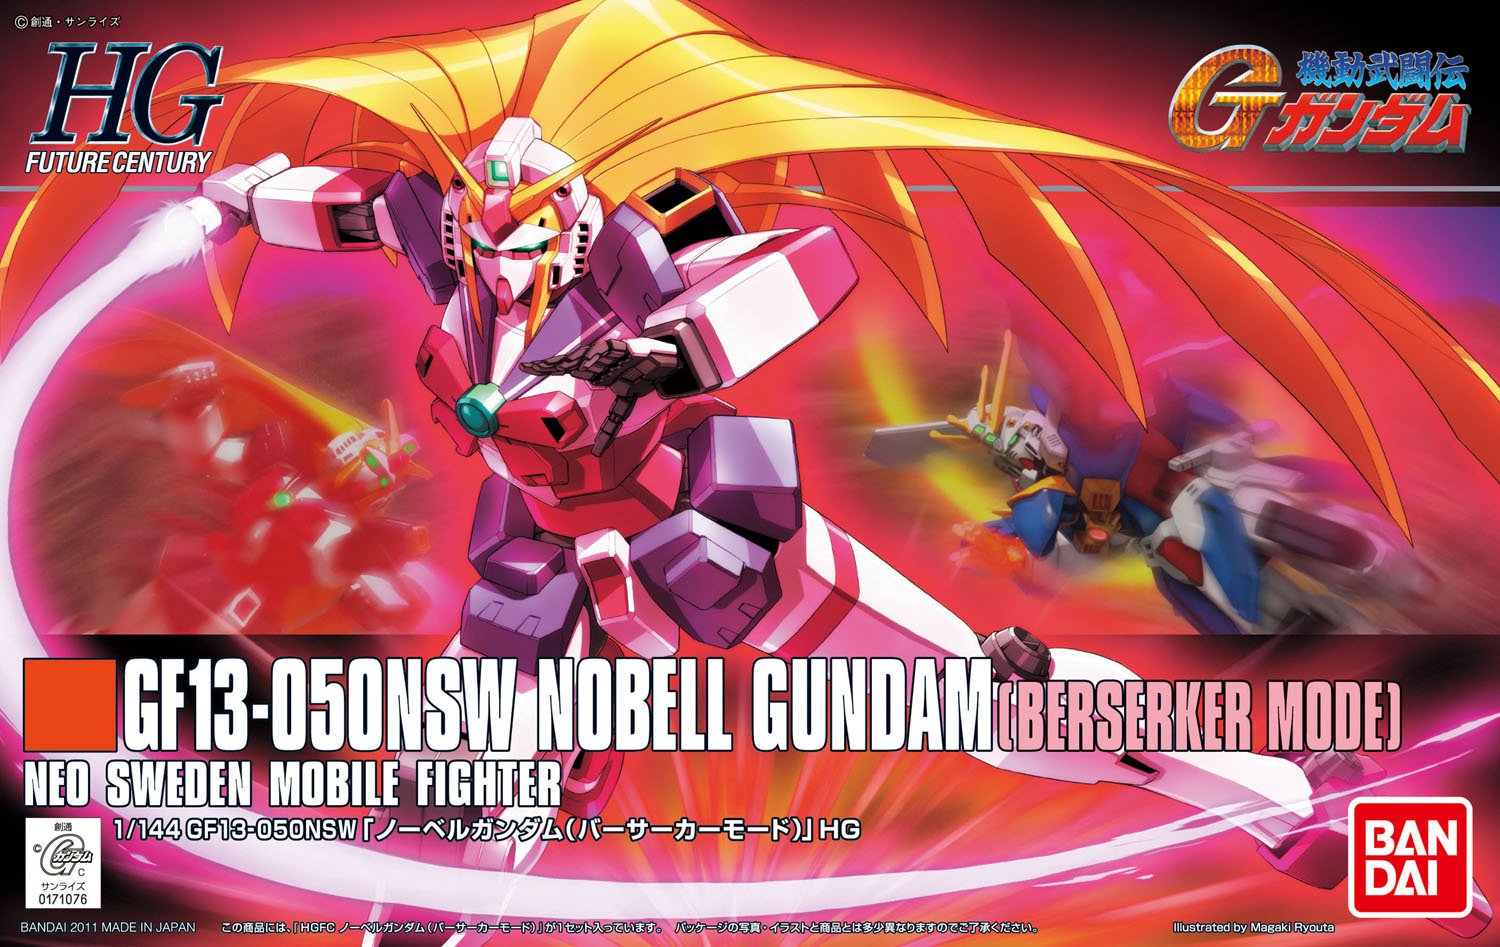 Nobel Gundam